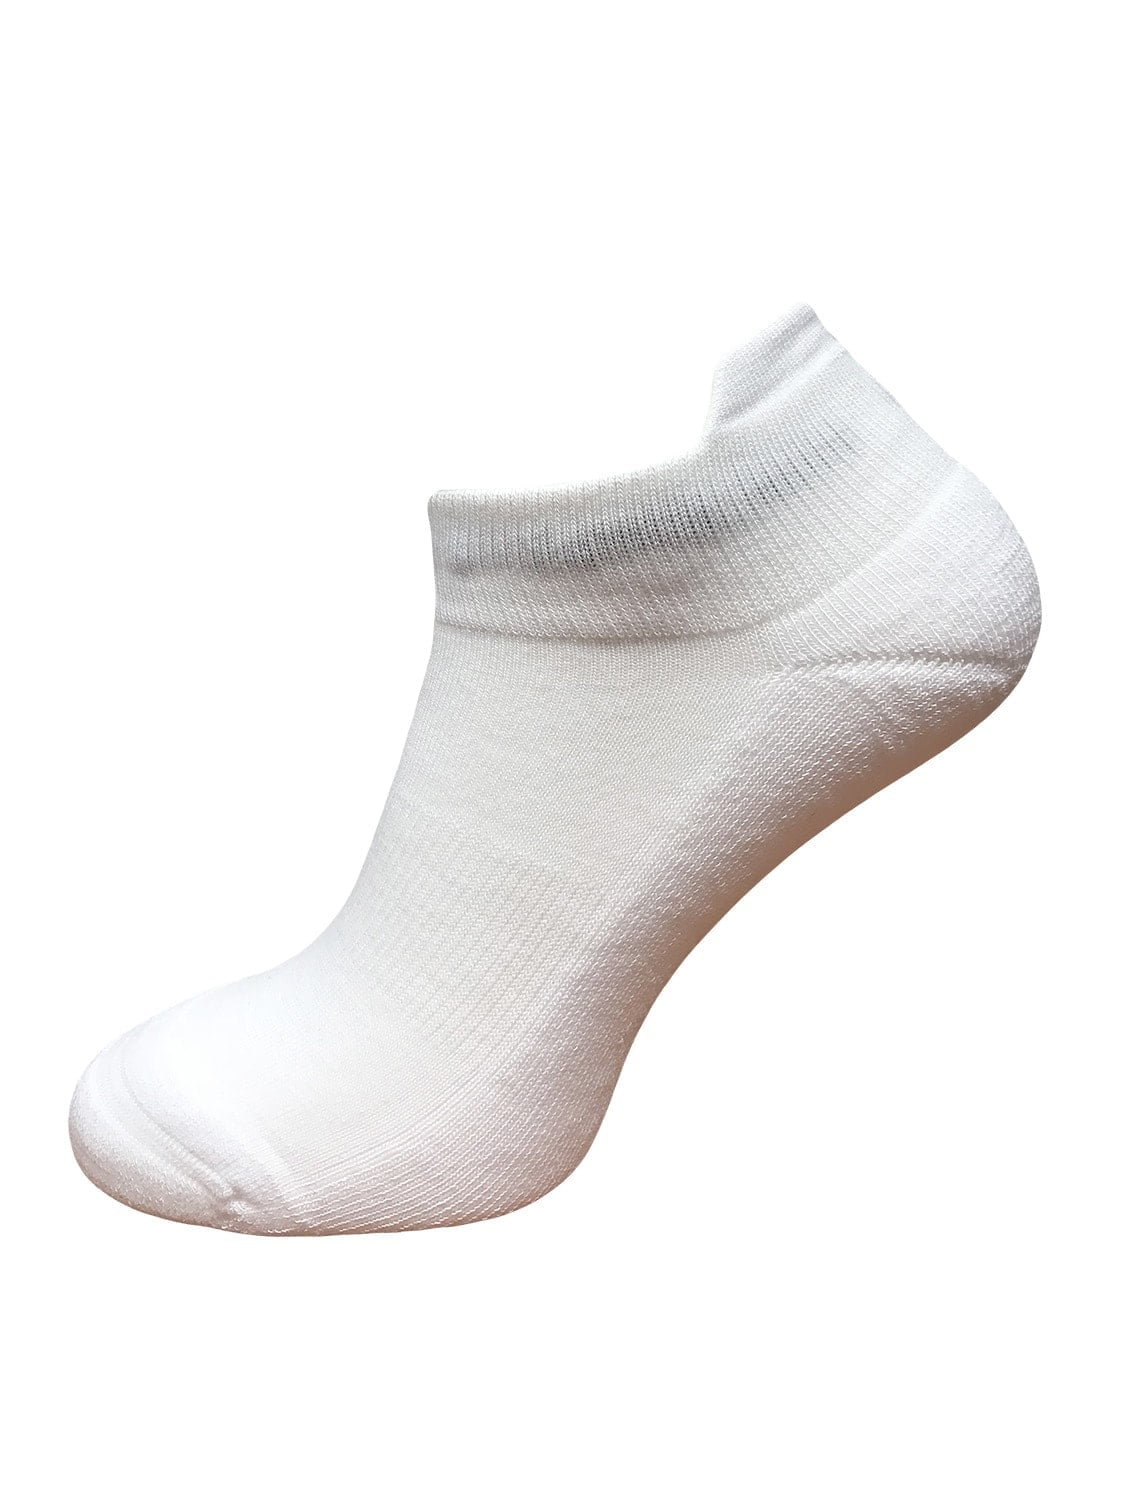 Ankle Socks - Comfort Fit for Men & Women » Chaffree